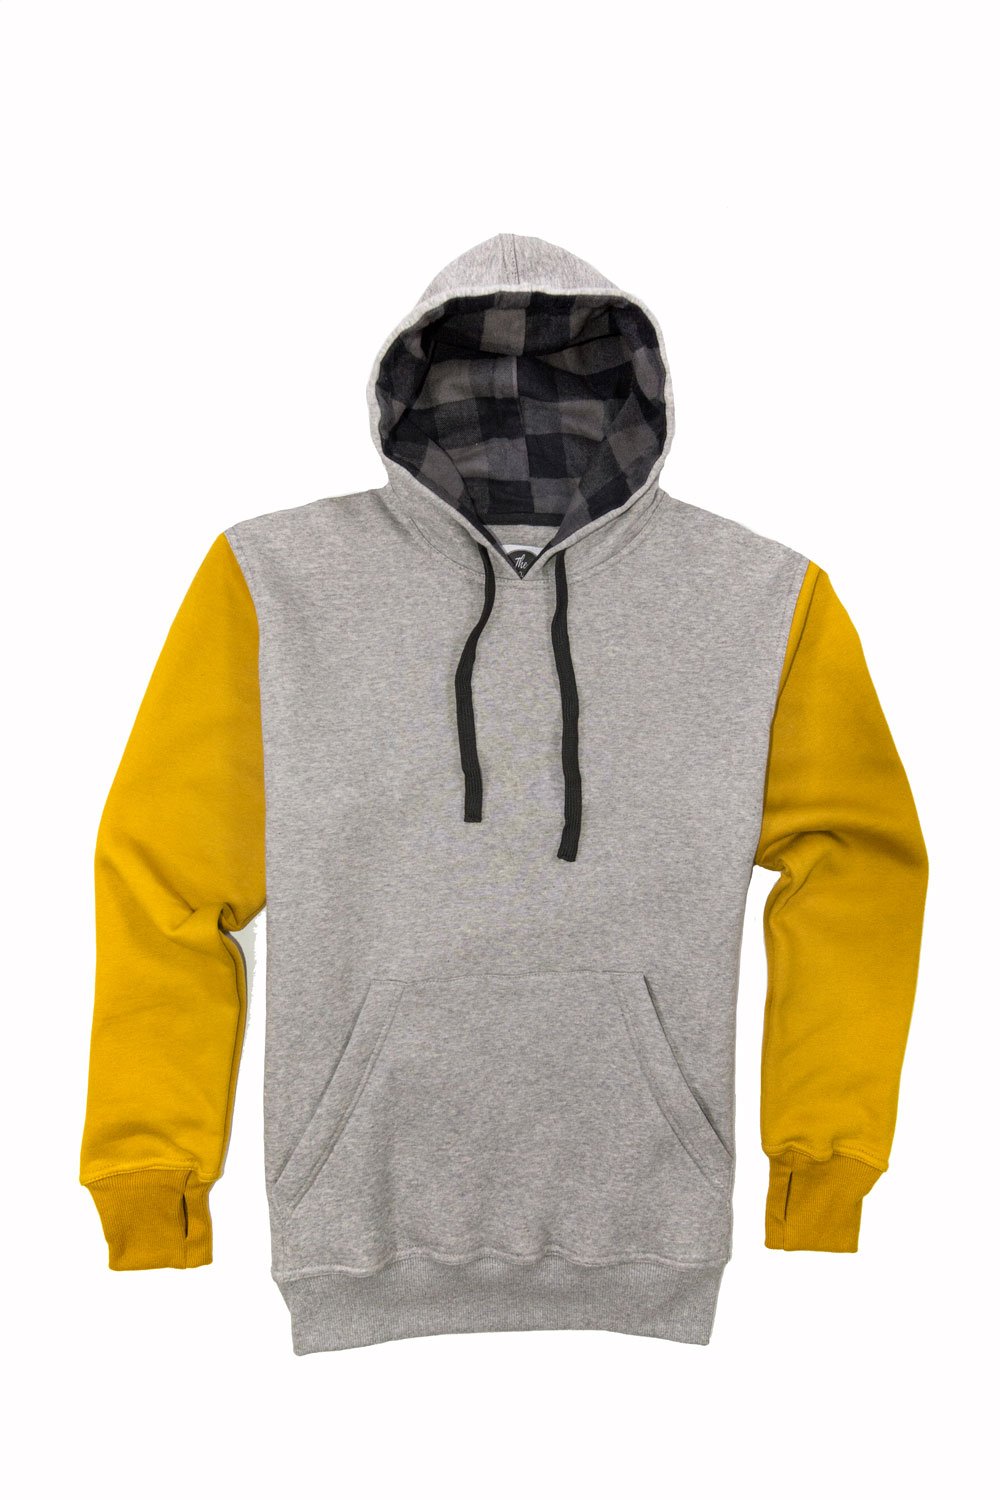 Mustard and grey taller cut hoodie